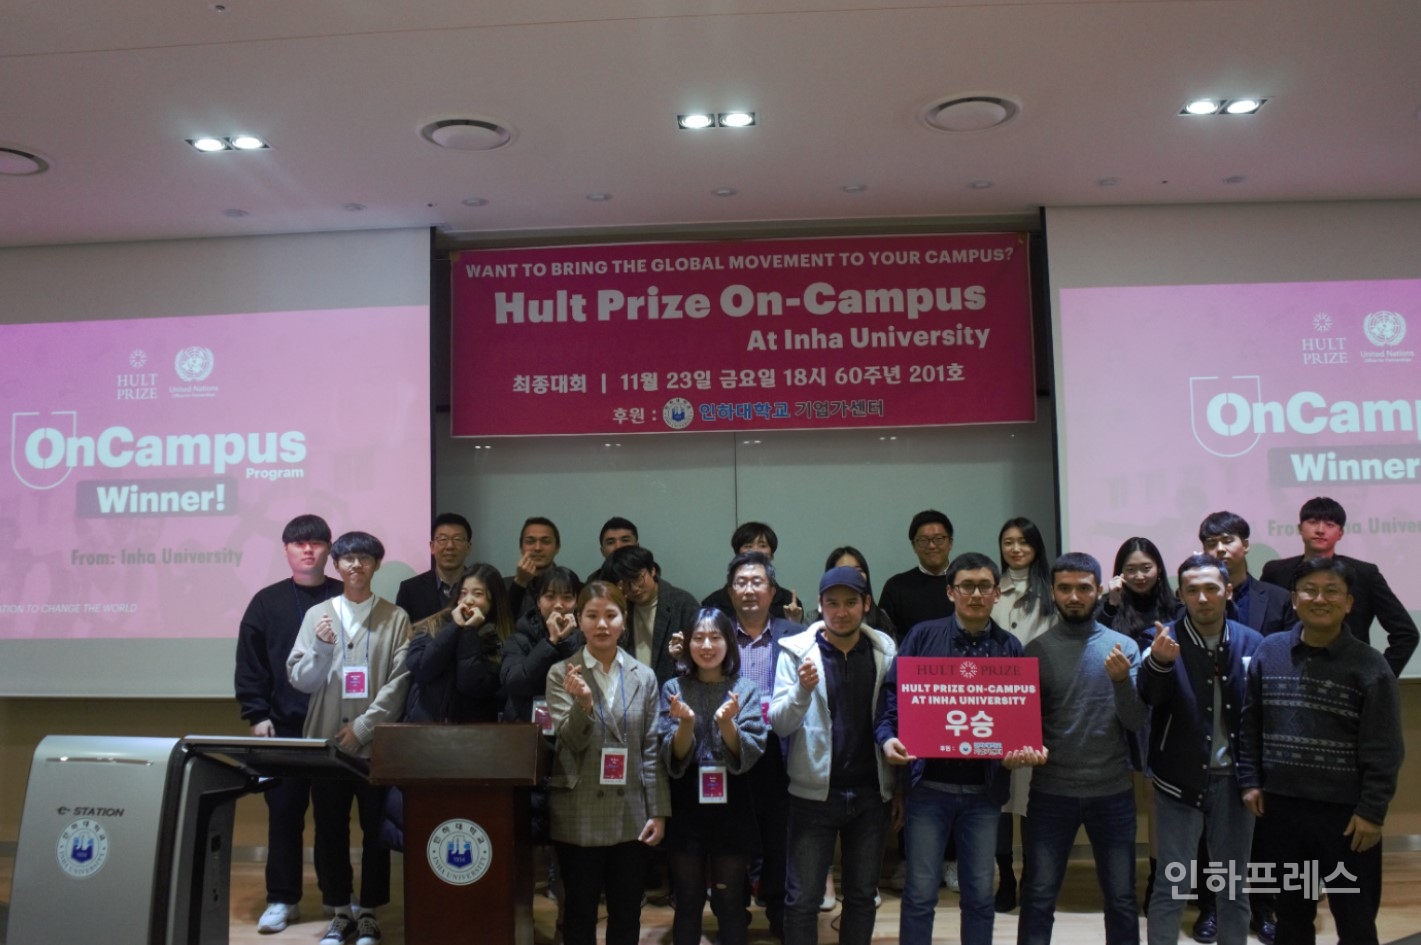  1ȸ Hult Prize on campus, Ȳ 